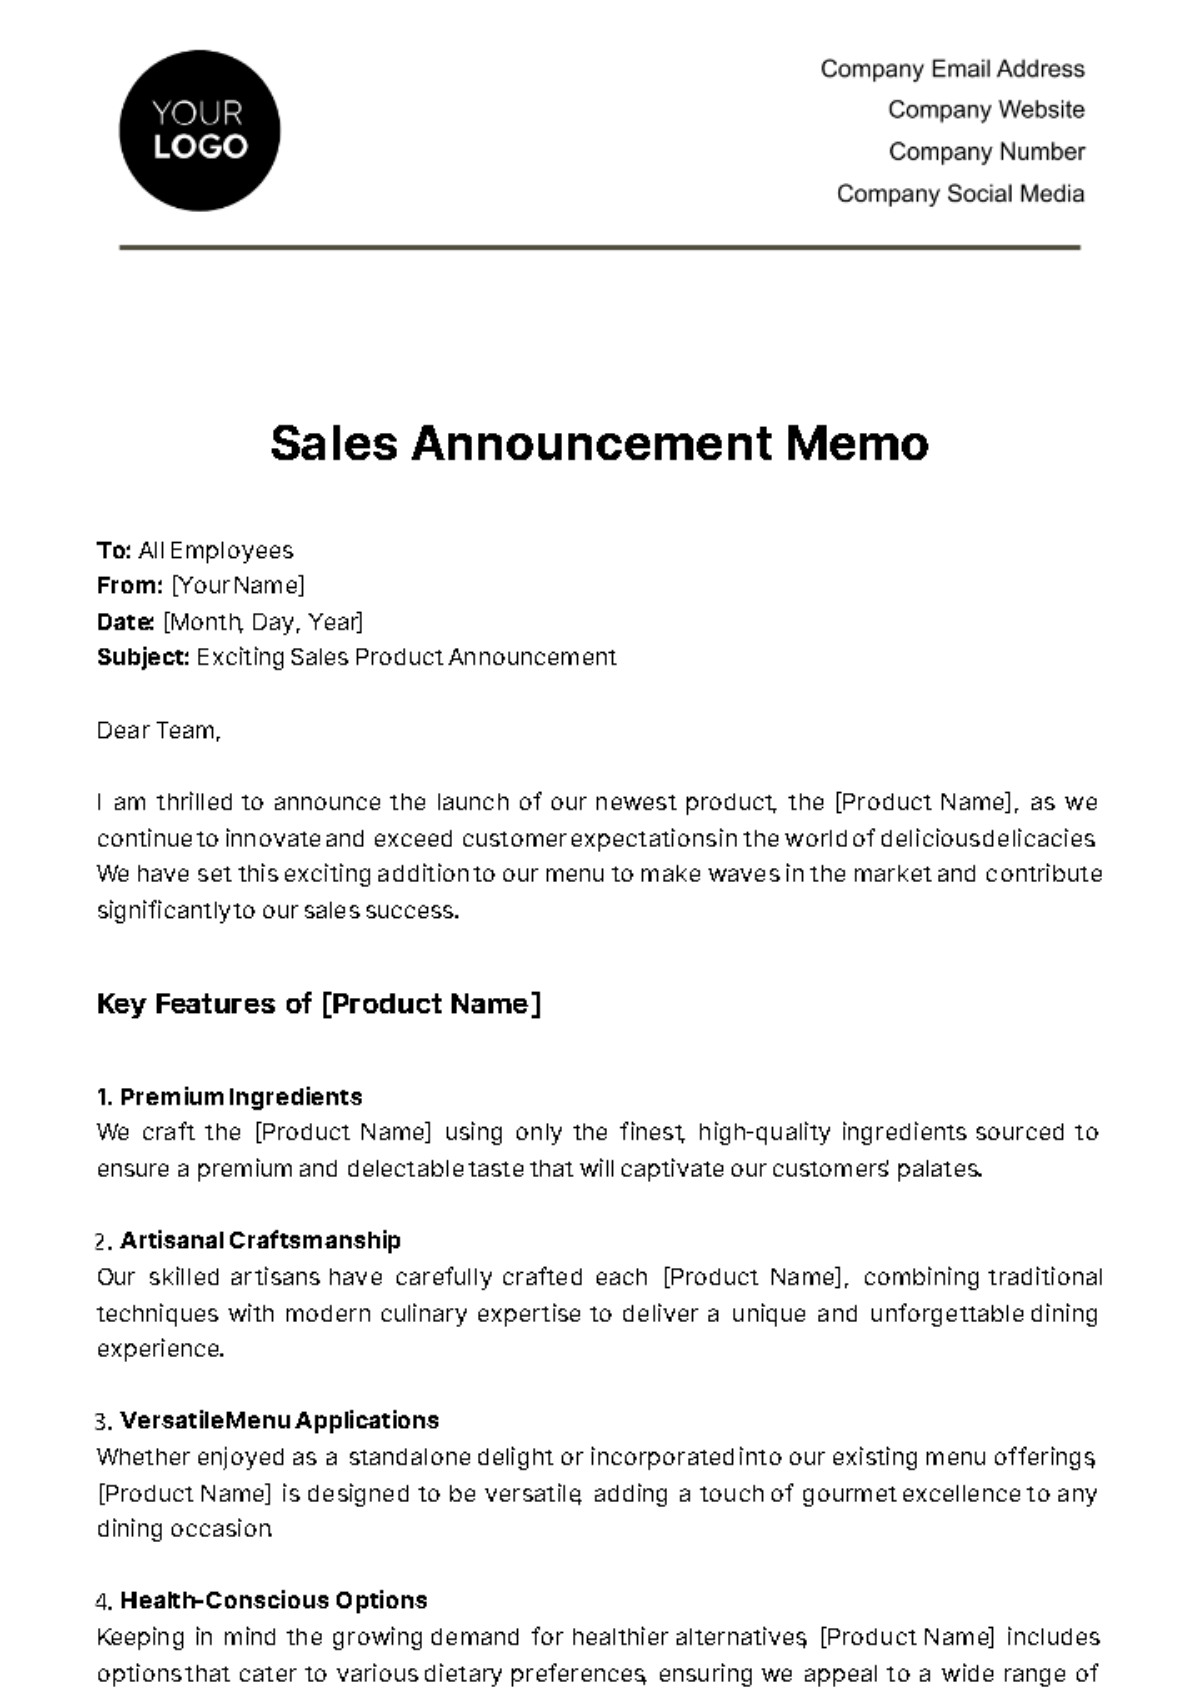 Sales Announcement Memo Template